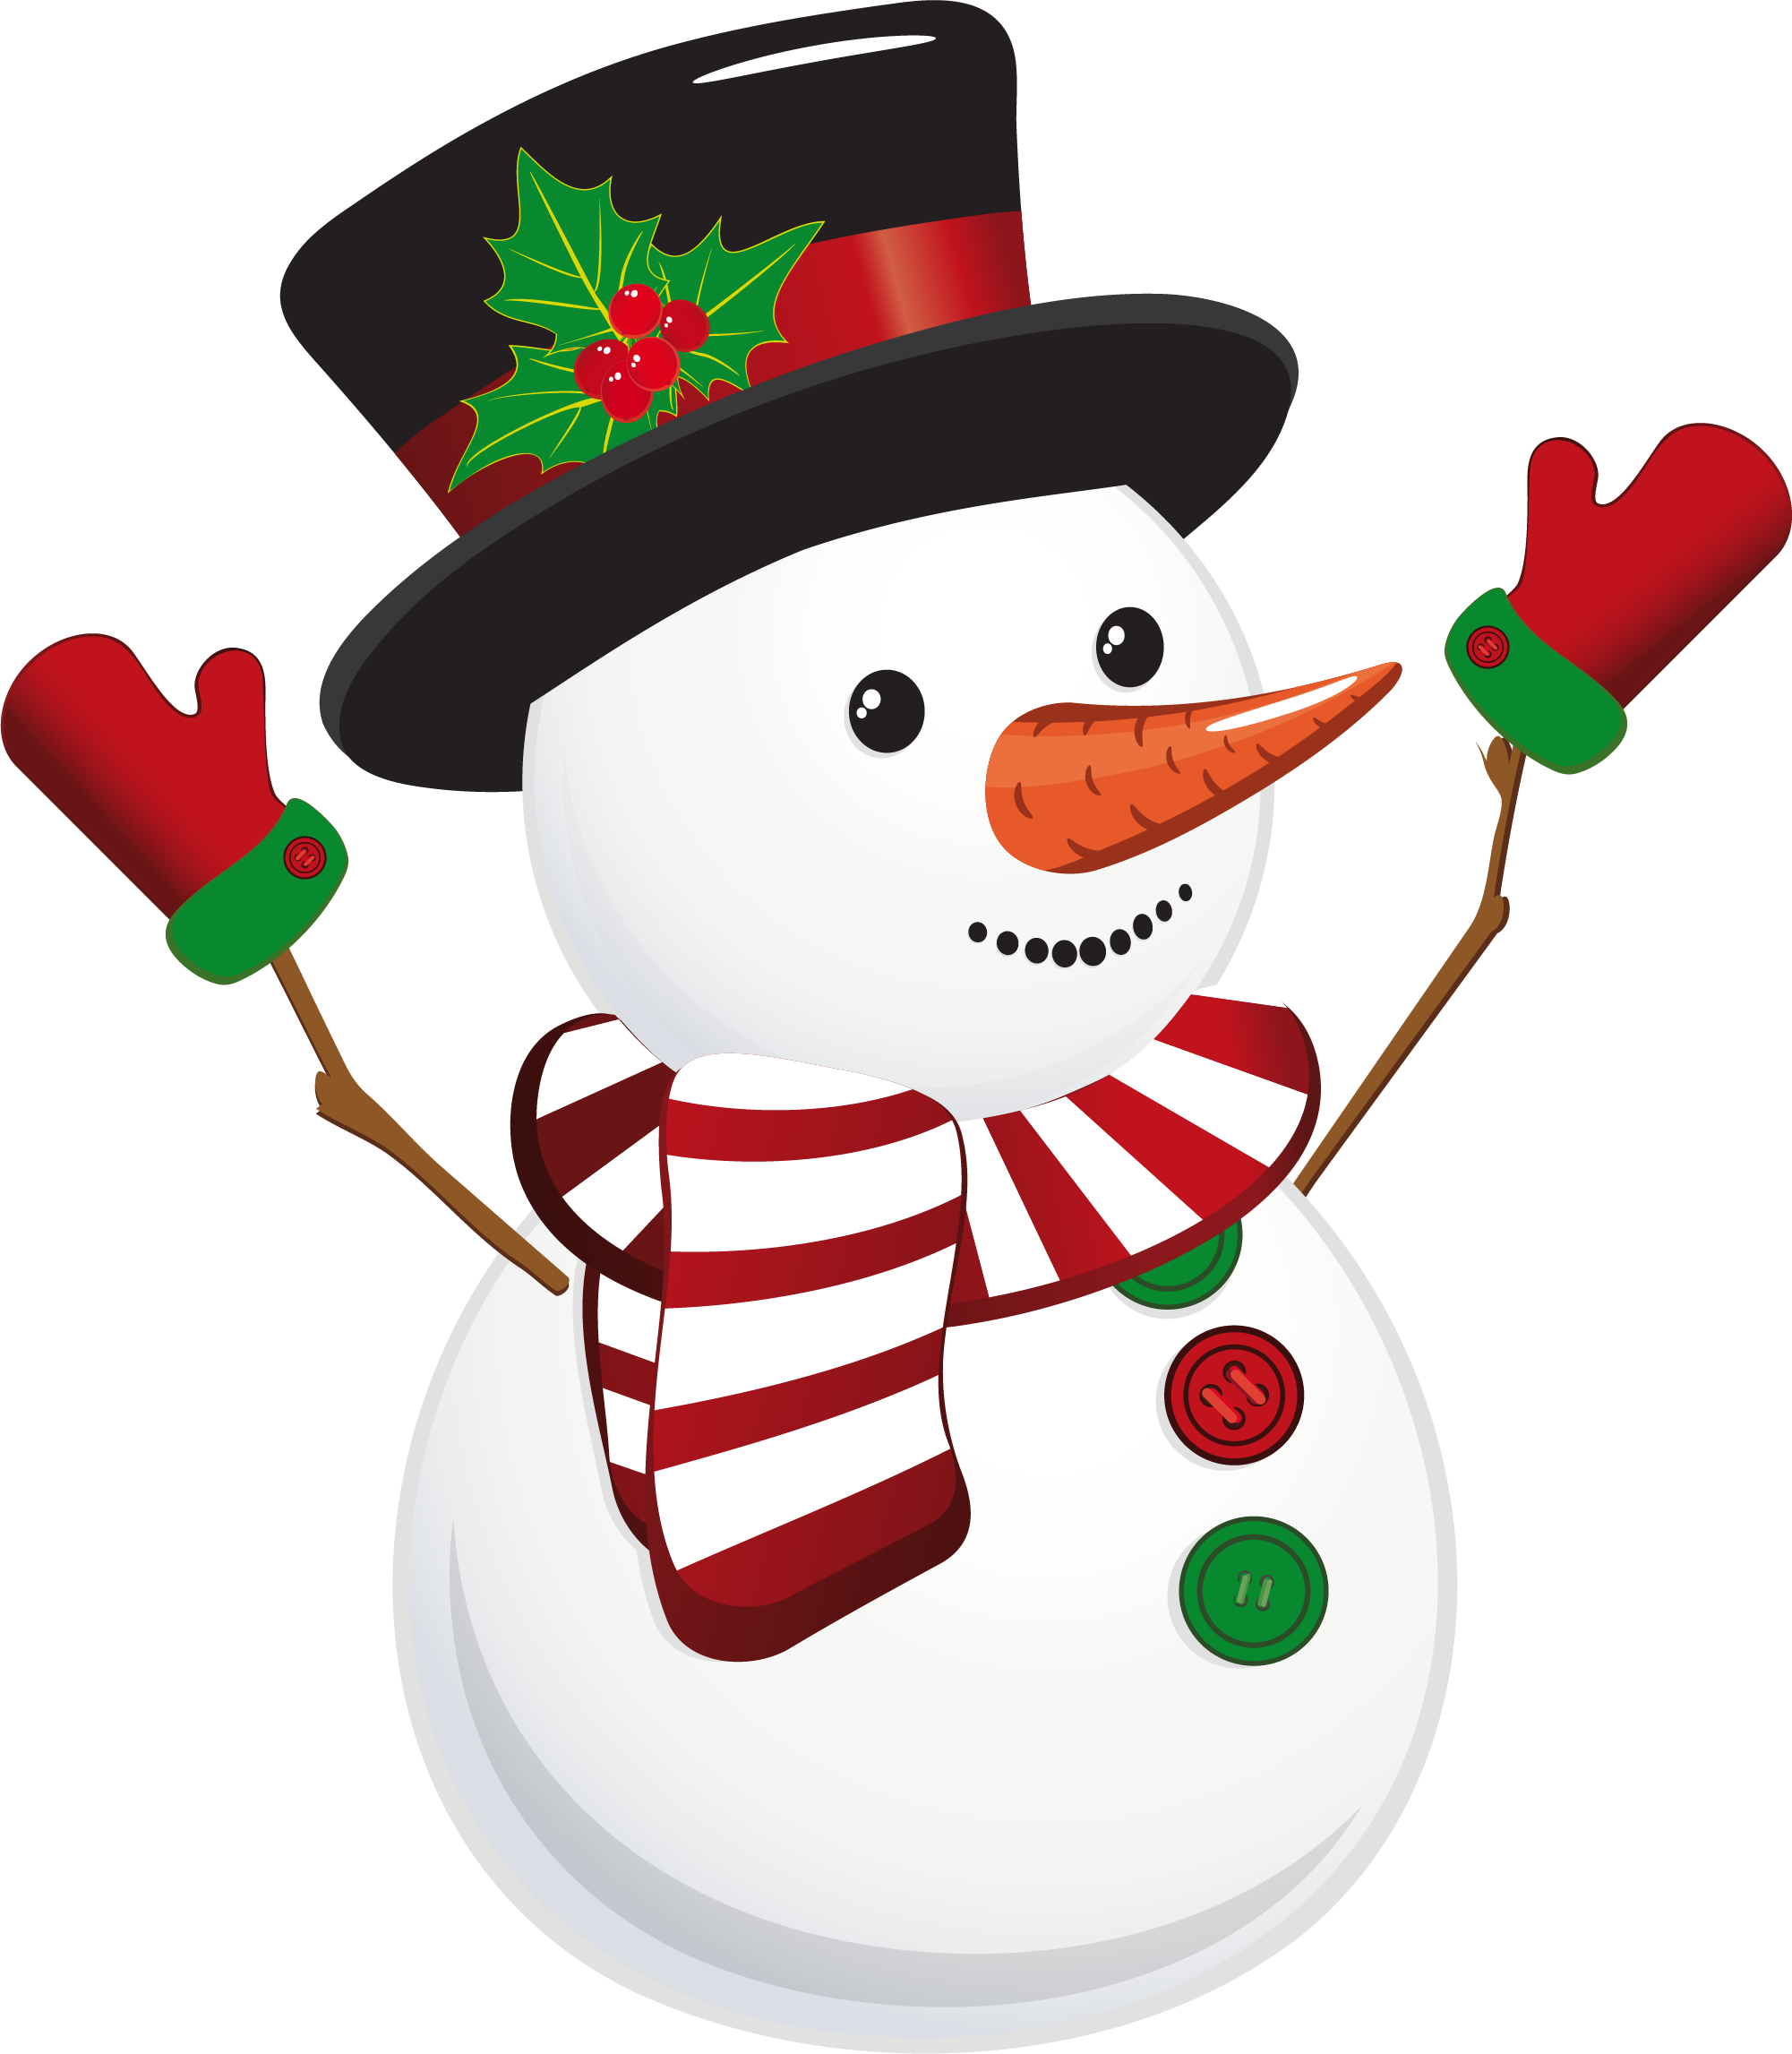 Download Snowman Claus Cartoon Santa White Christmas Card HQ PNG Image ...